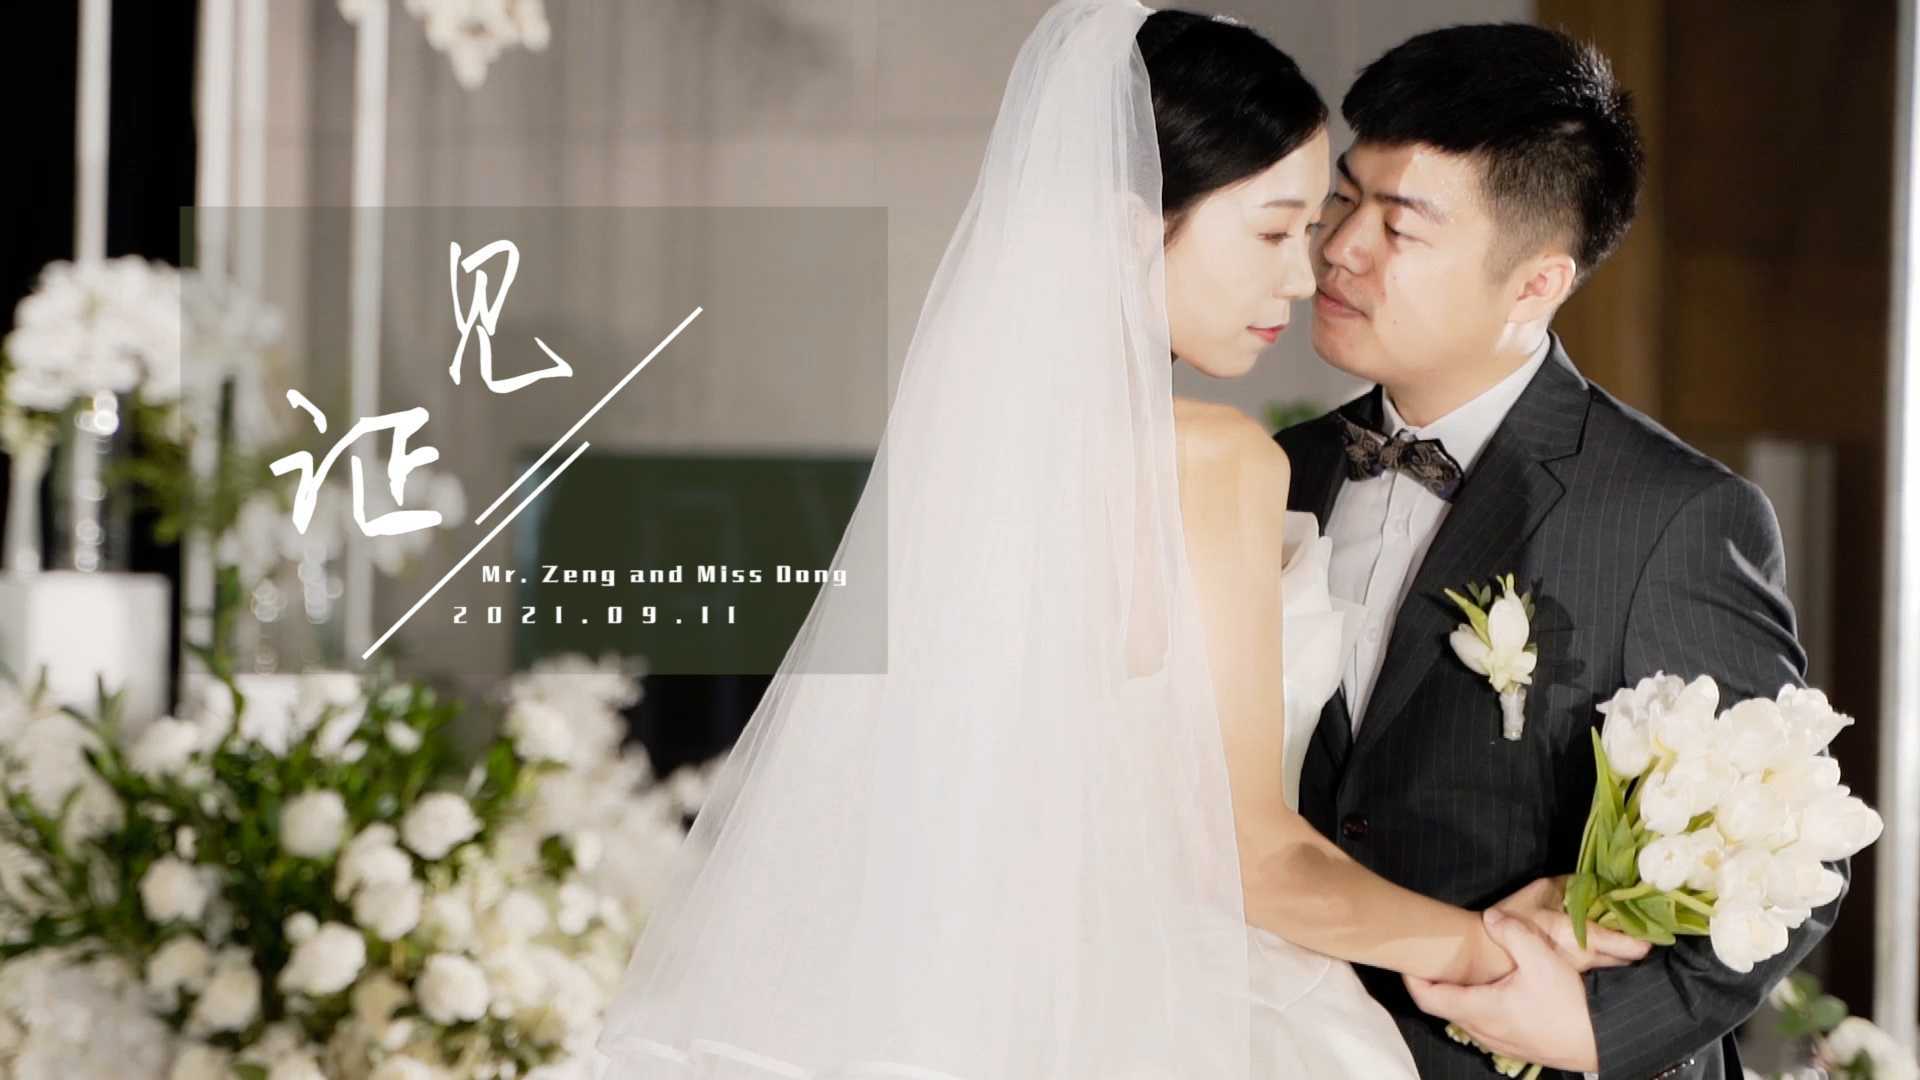 Hefeng films | 婚礼电影《见证》